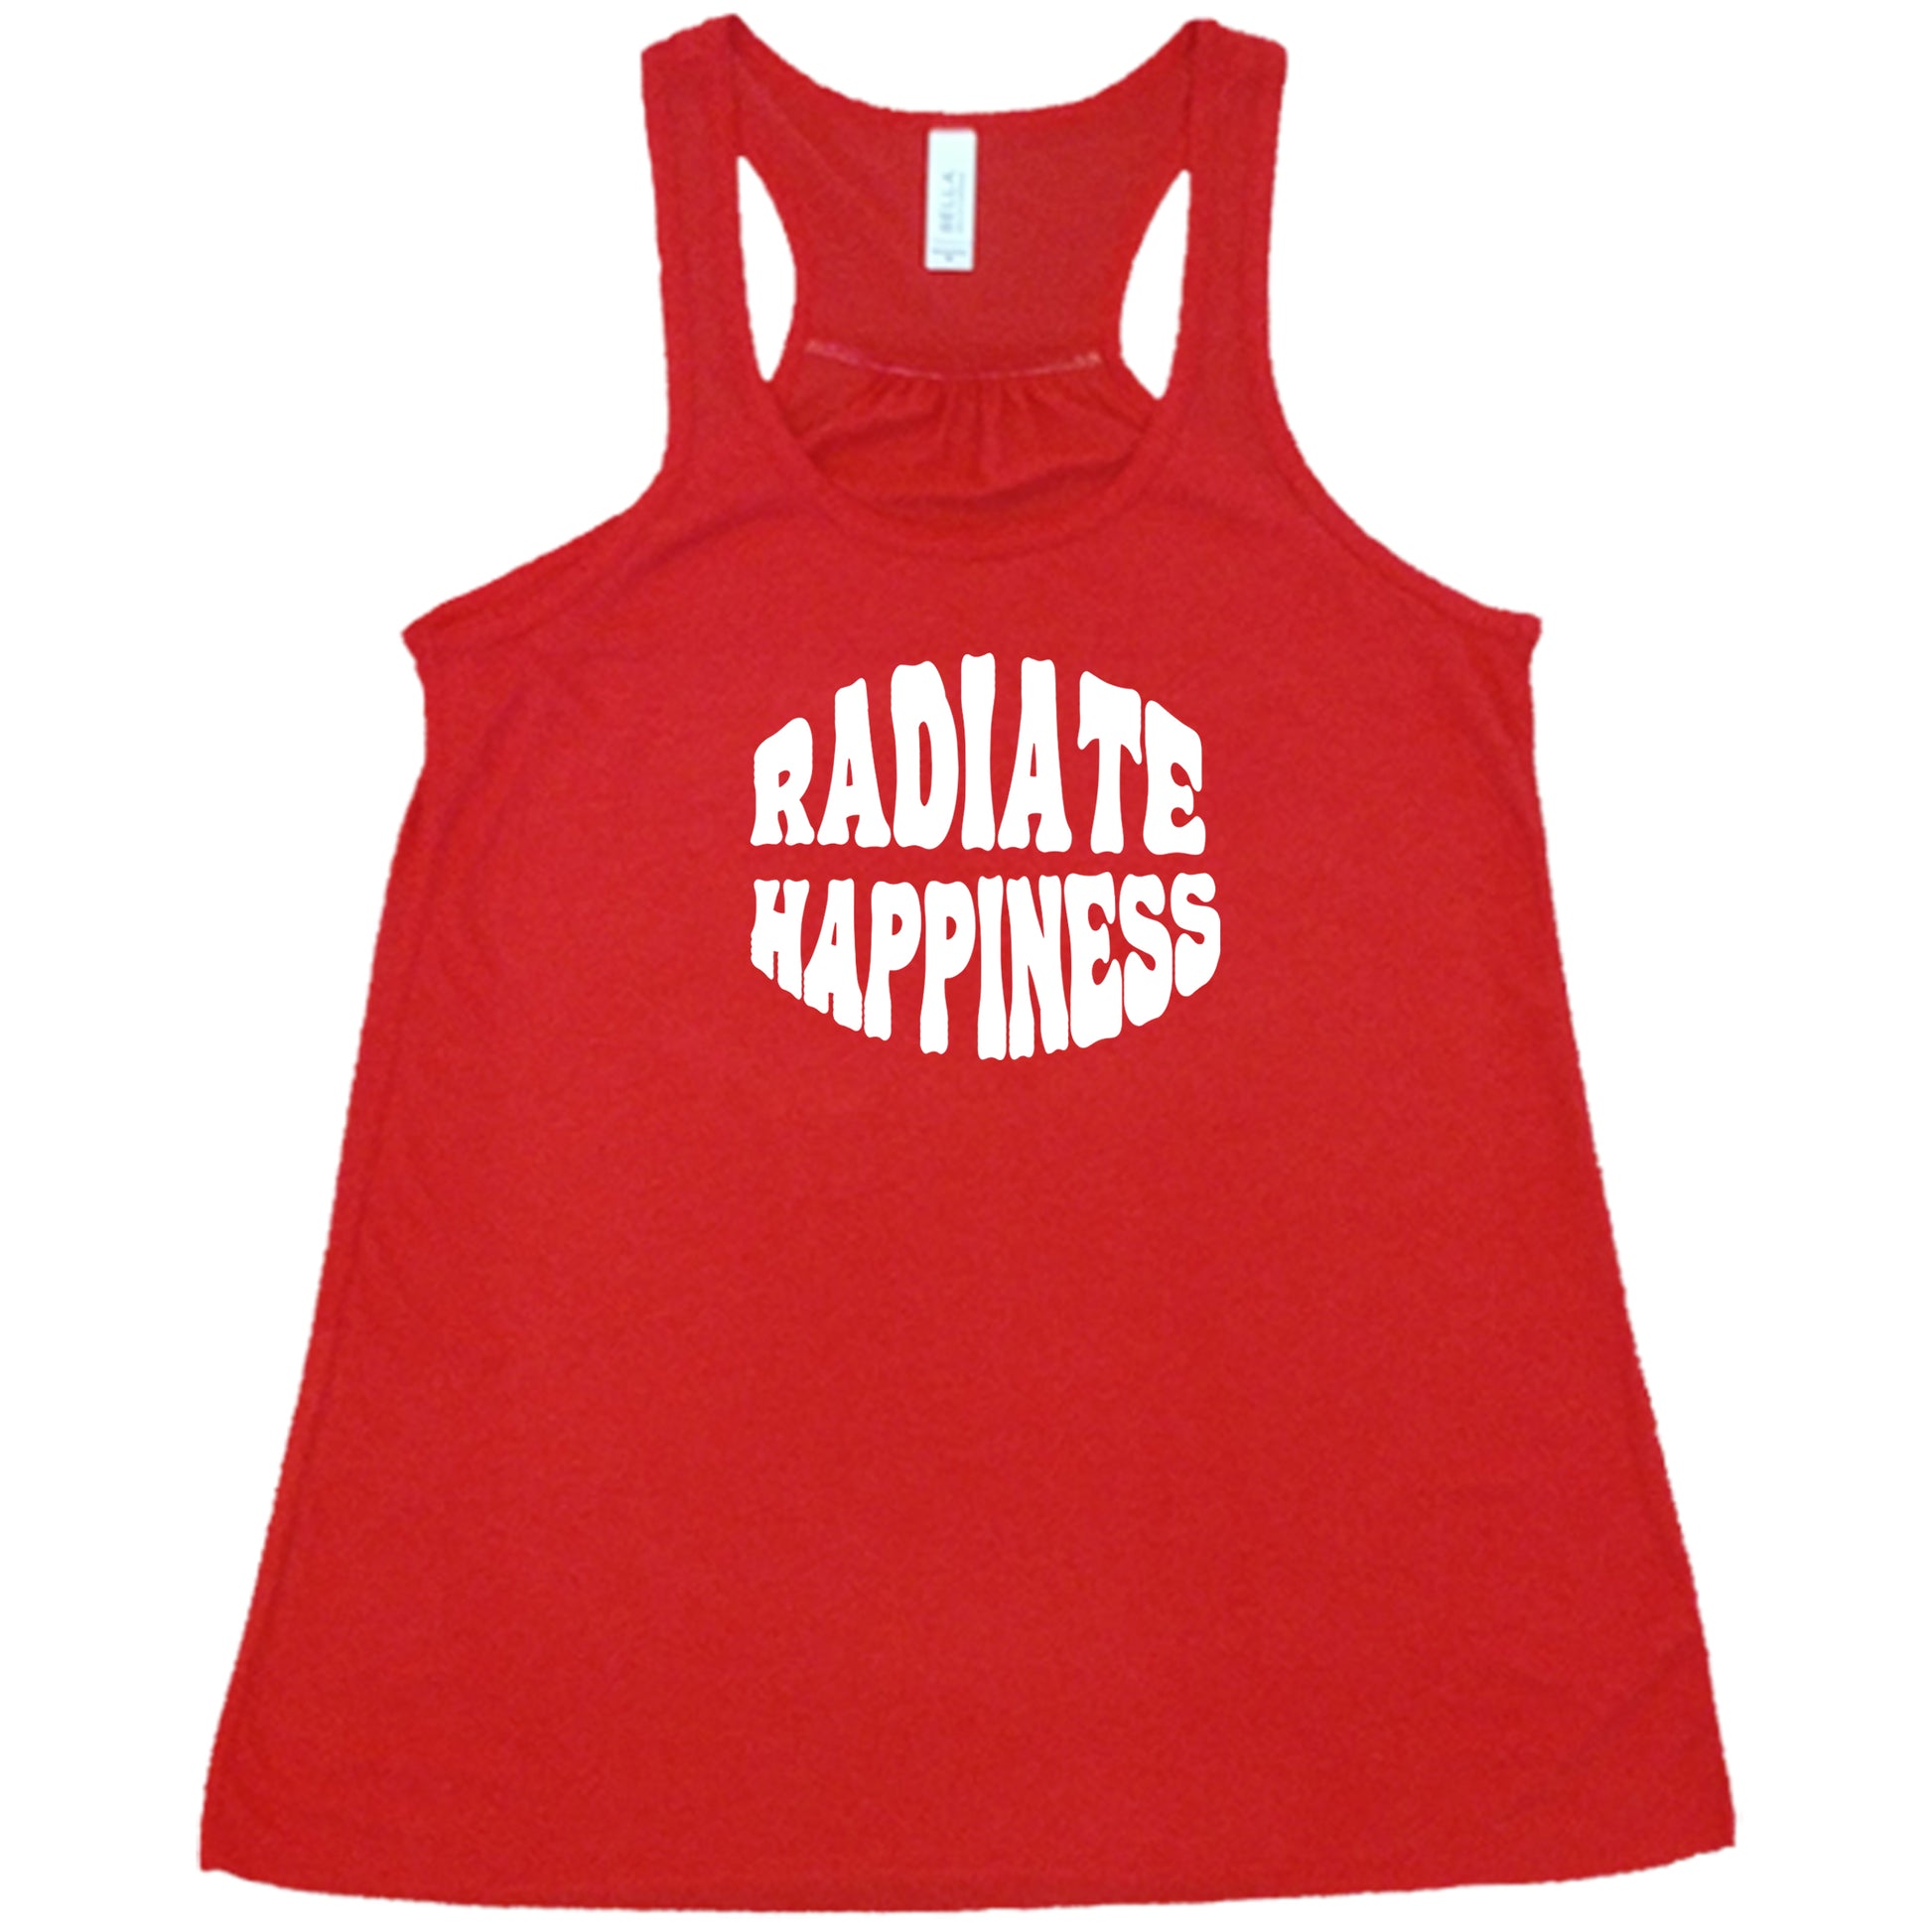 radiate happiness red racerback shirt